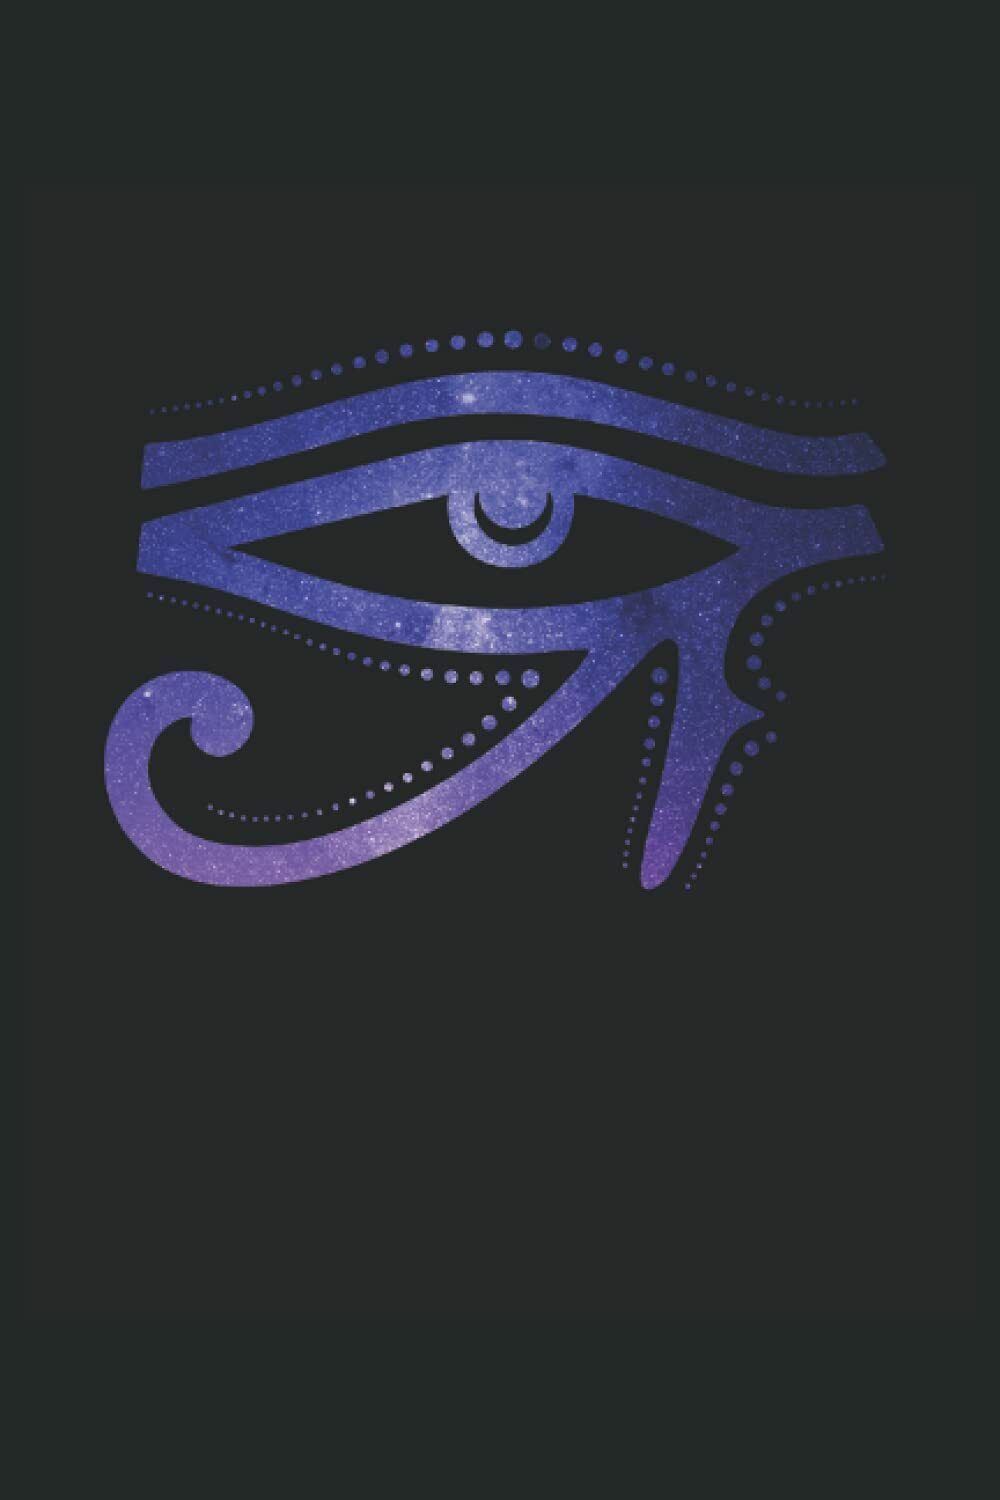 Occhio cosmico del ra: Geroglyfyphyping egiziano spirituality Esoterik Regali No